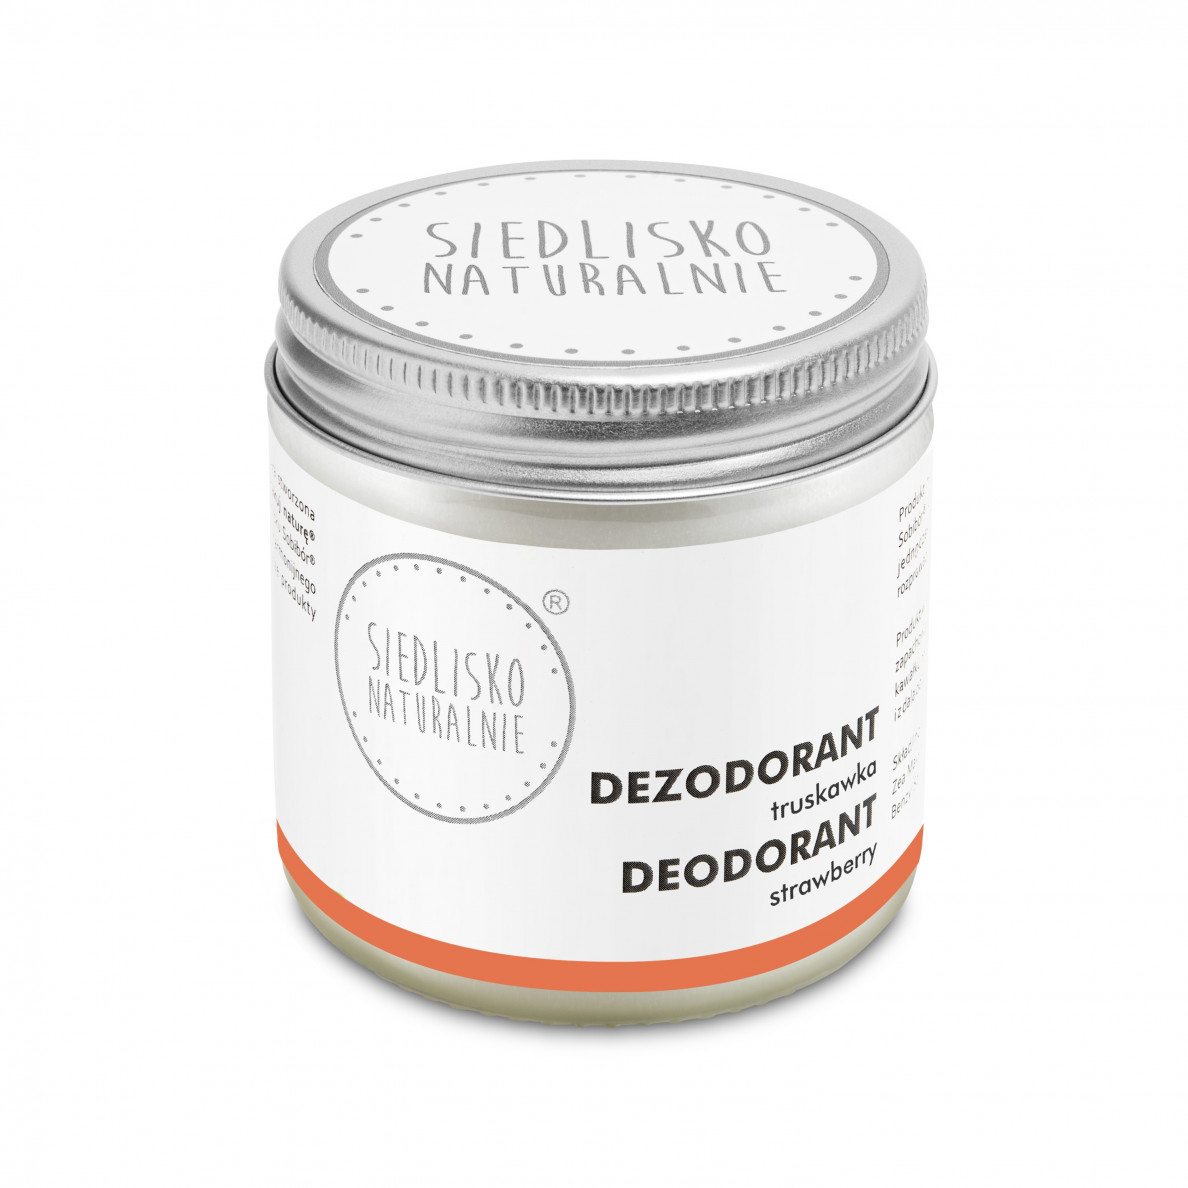 Dezodorant / antyperspirant w kremie - Truskawka